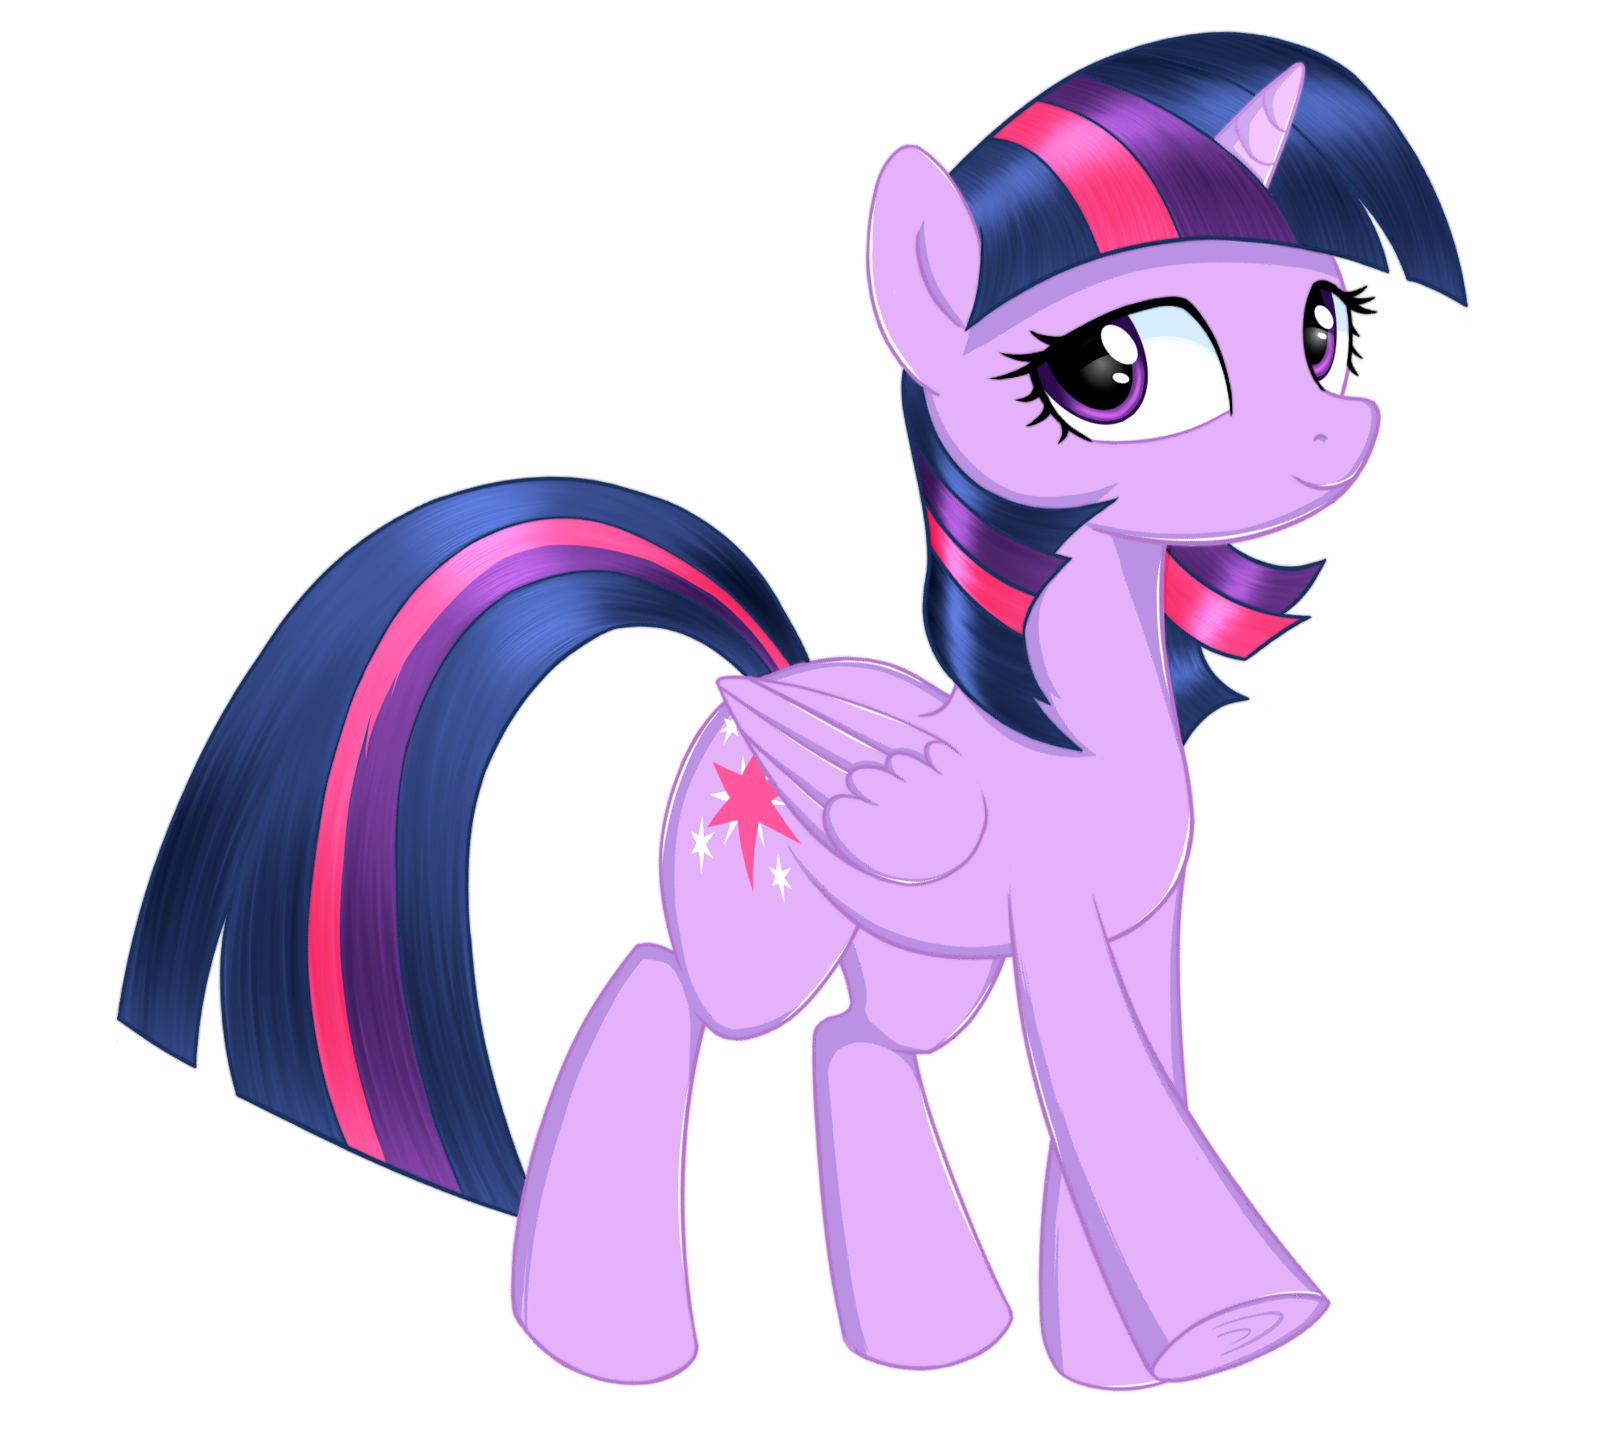 Pony twilight sparkle. Сумеречная Искорка/Твайлайт Спаркл. My little Pony Твайлайт Спаркл. My little Pony Twilight Sparkle.